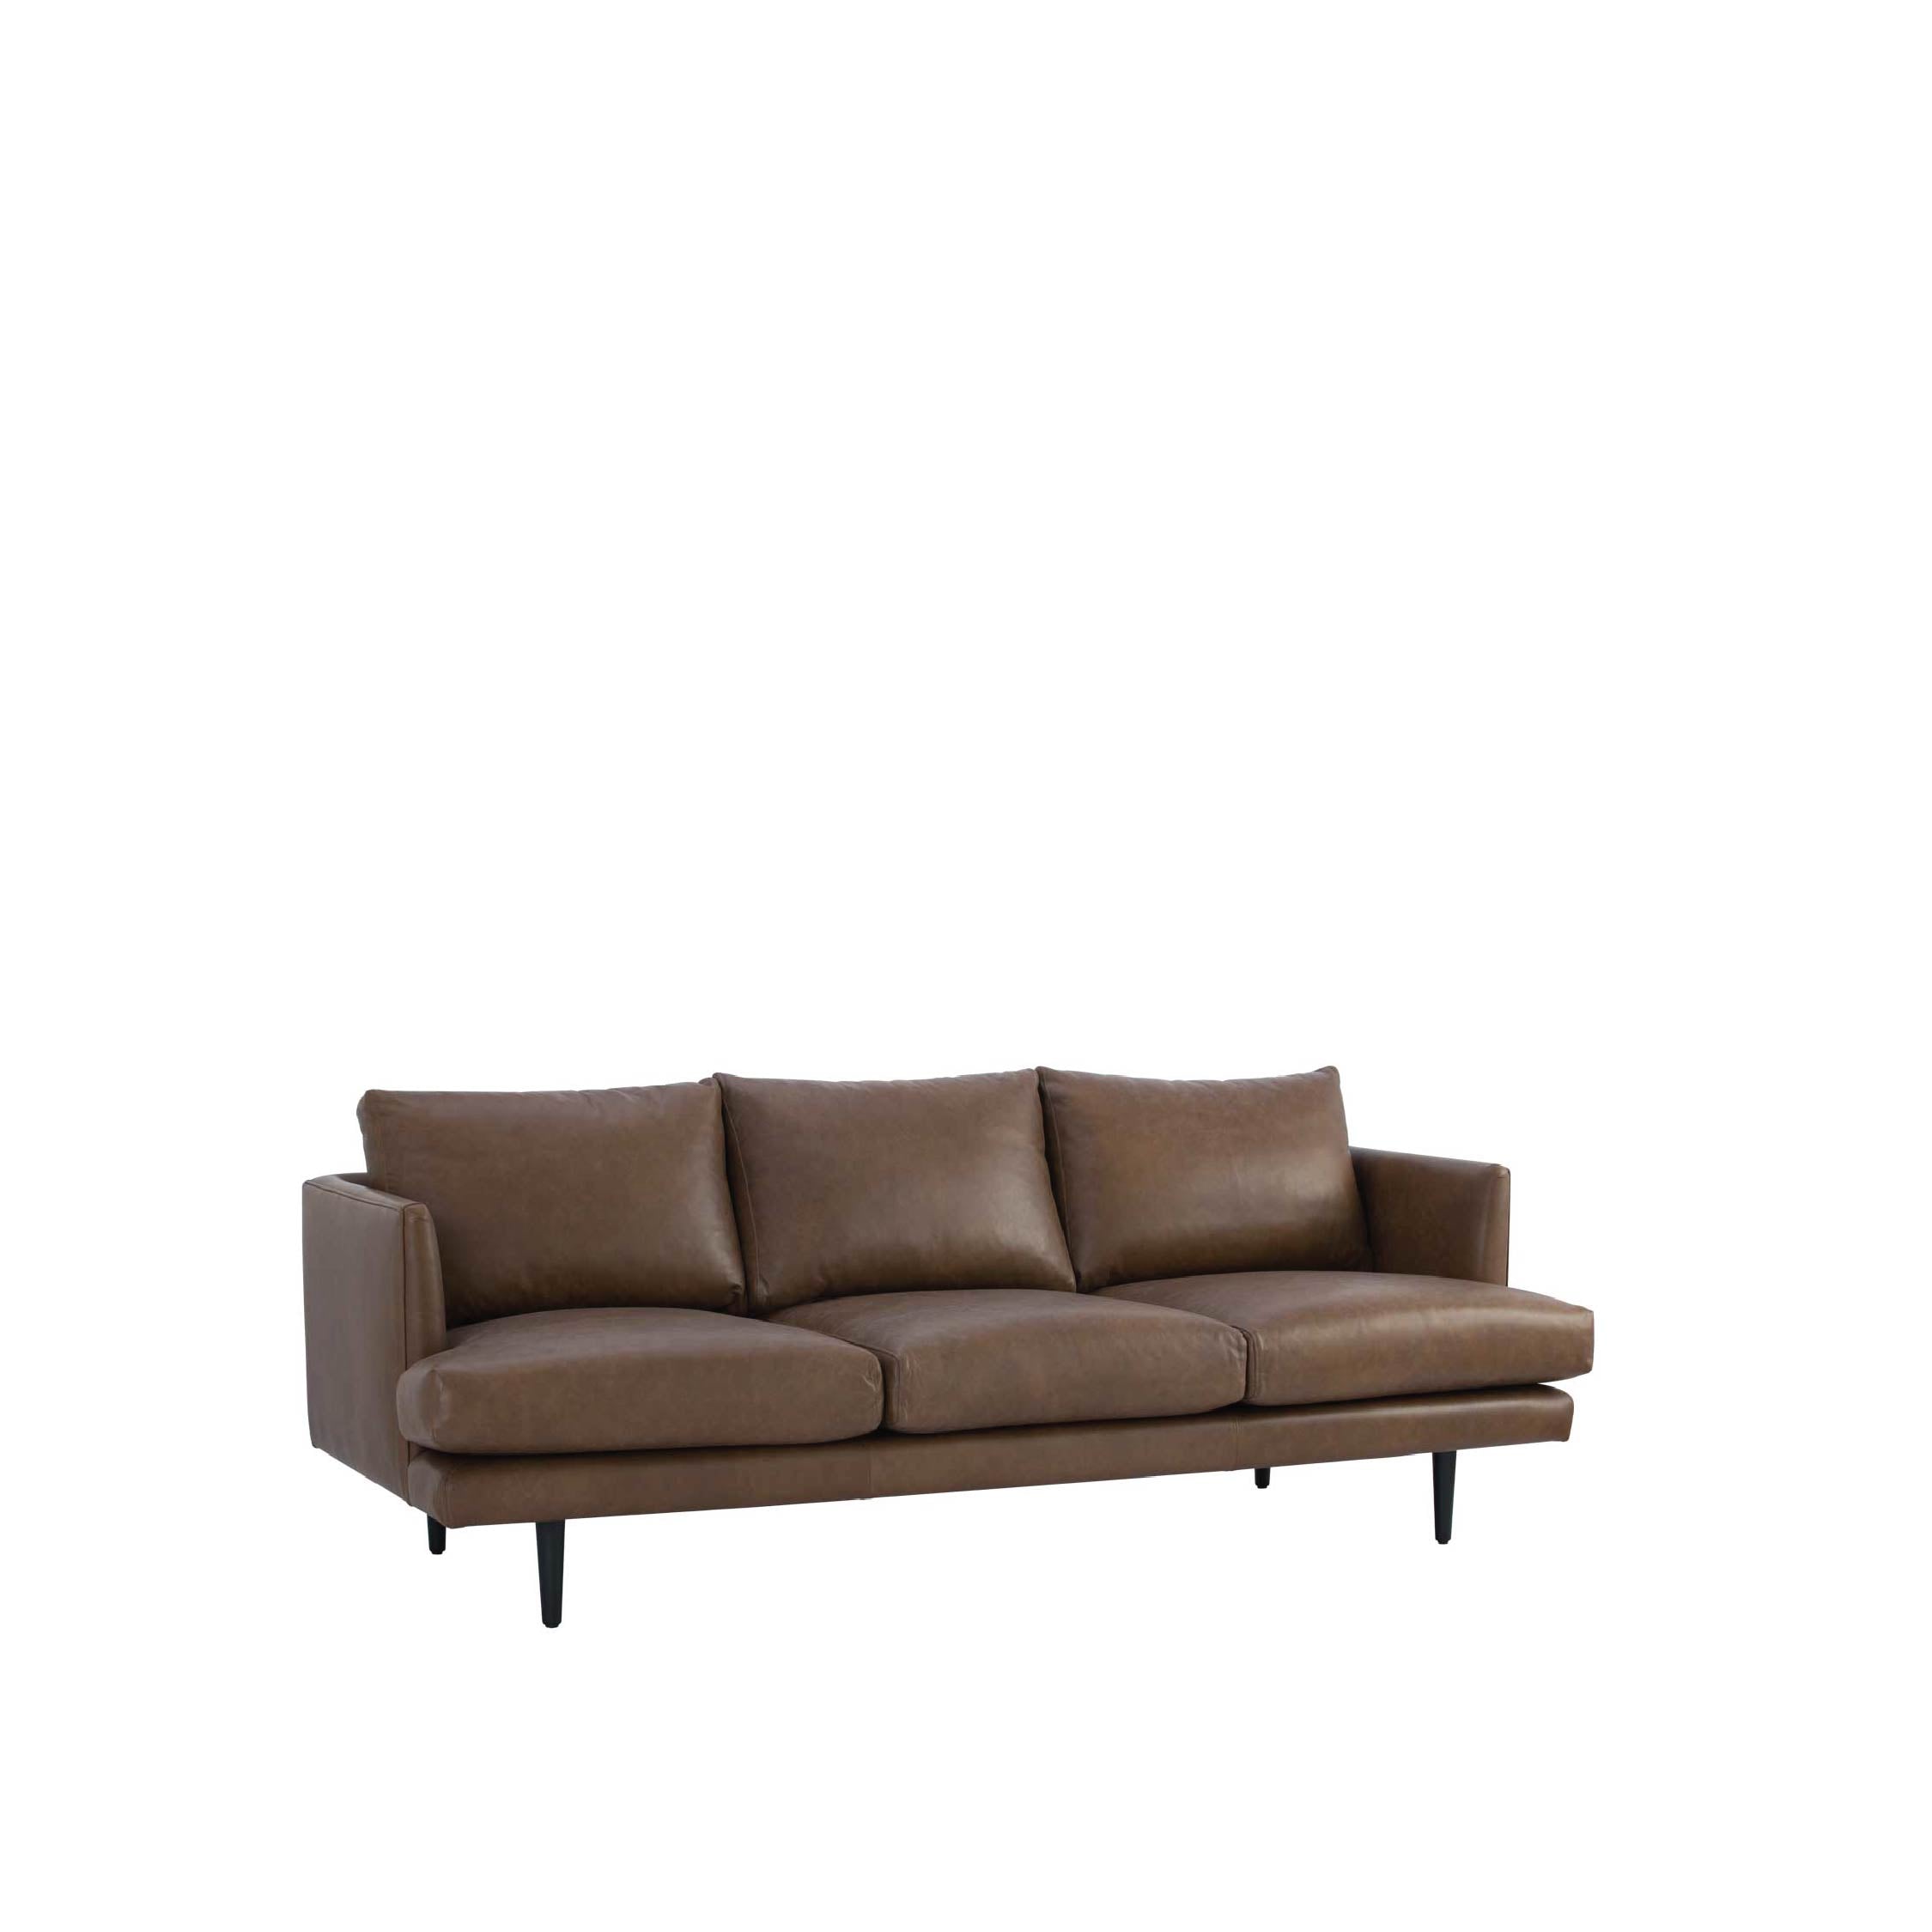 TIRUS Sofa 3 Seater Leather